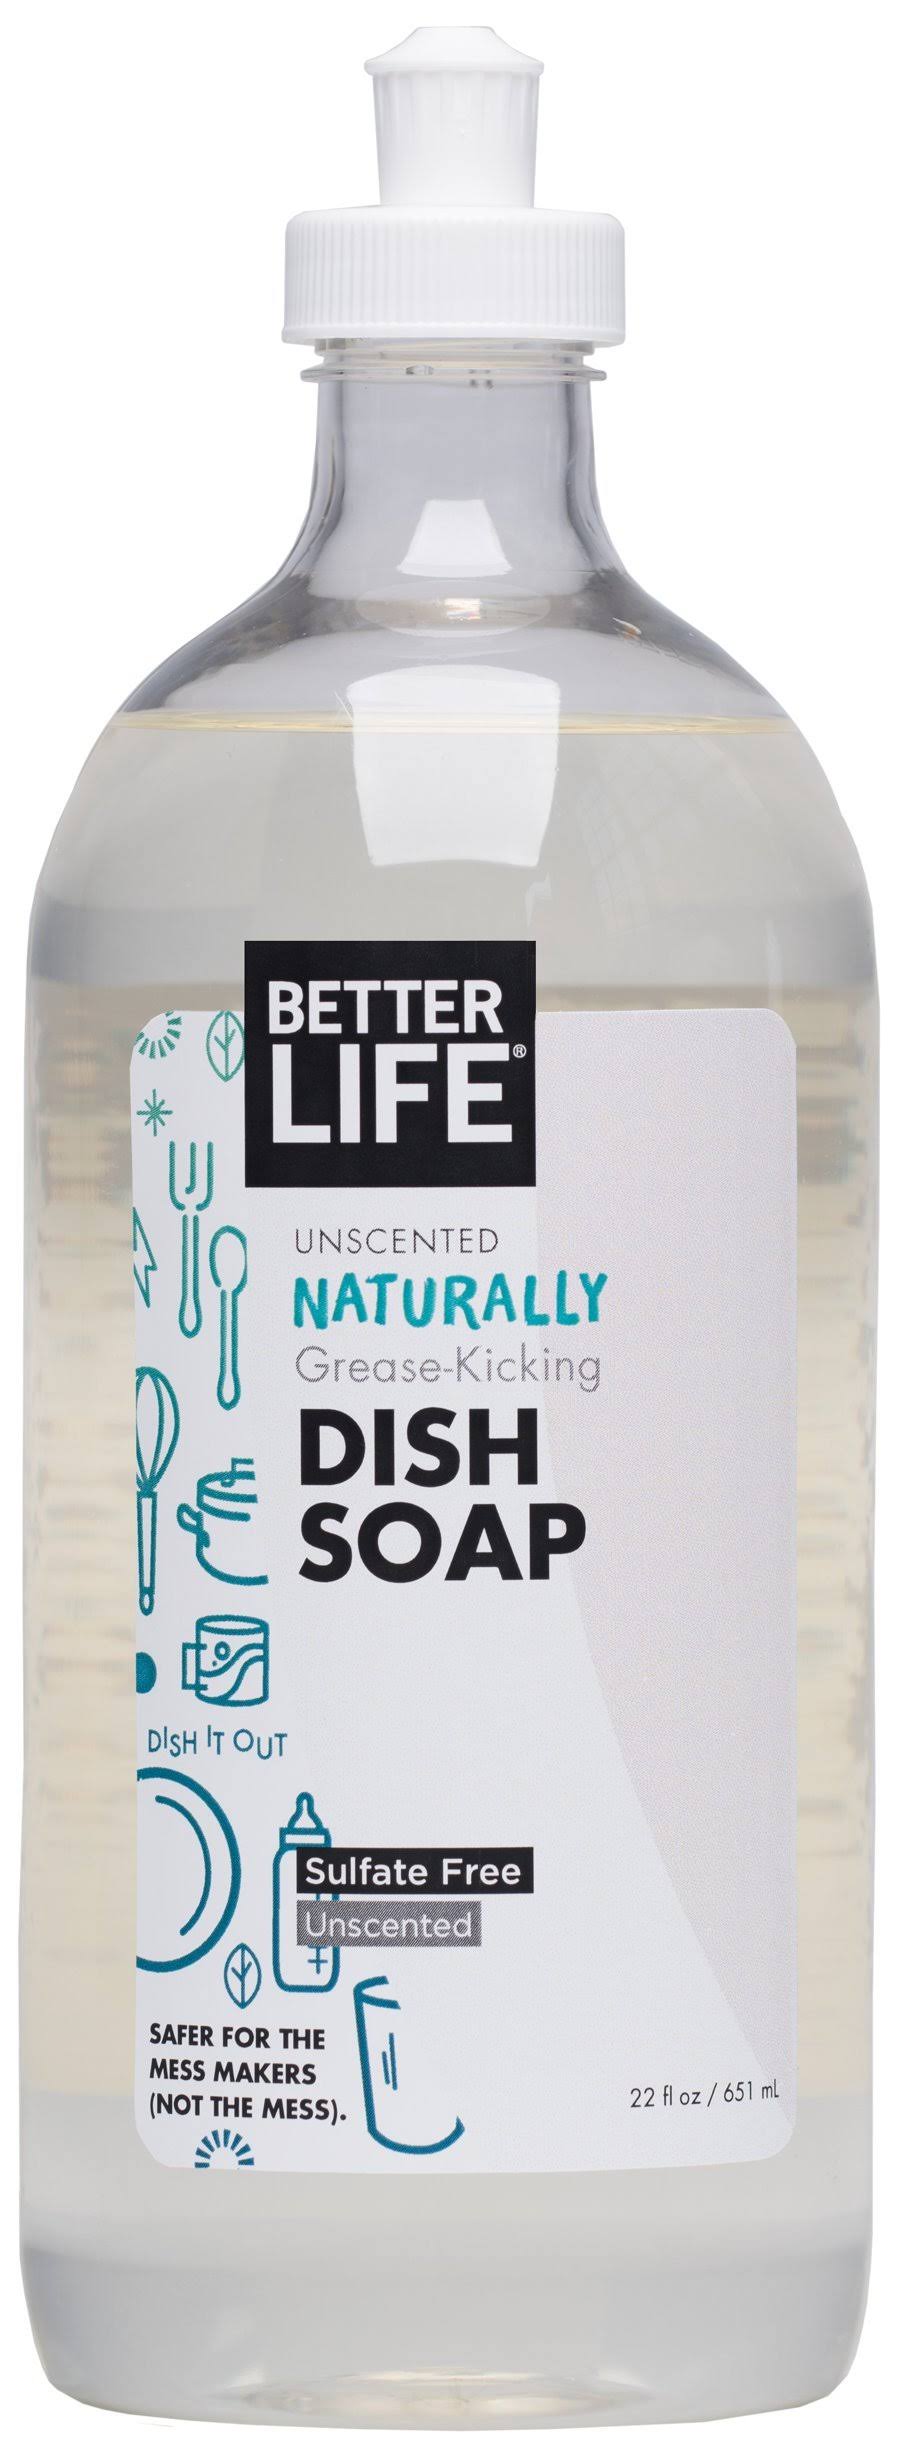 Better Life Dishwashing Soap - Unscented